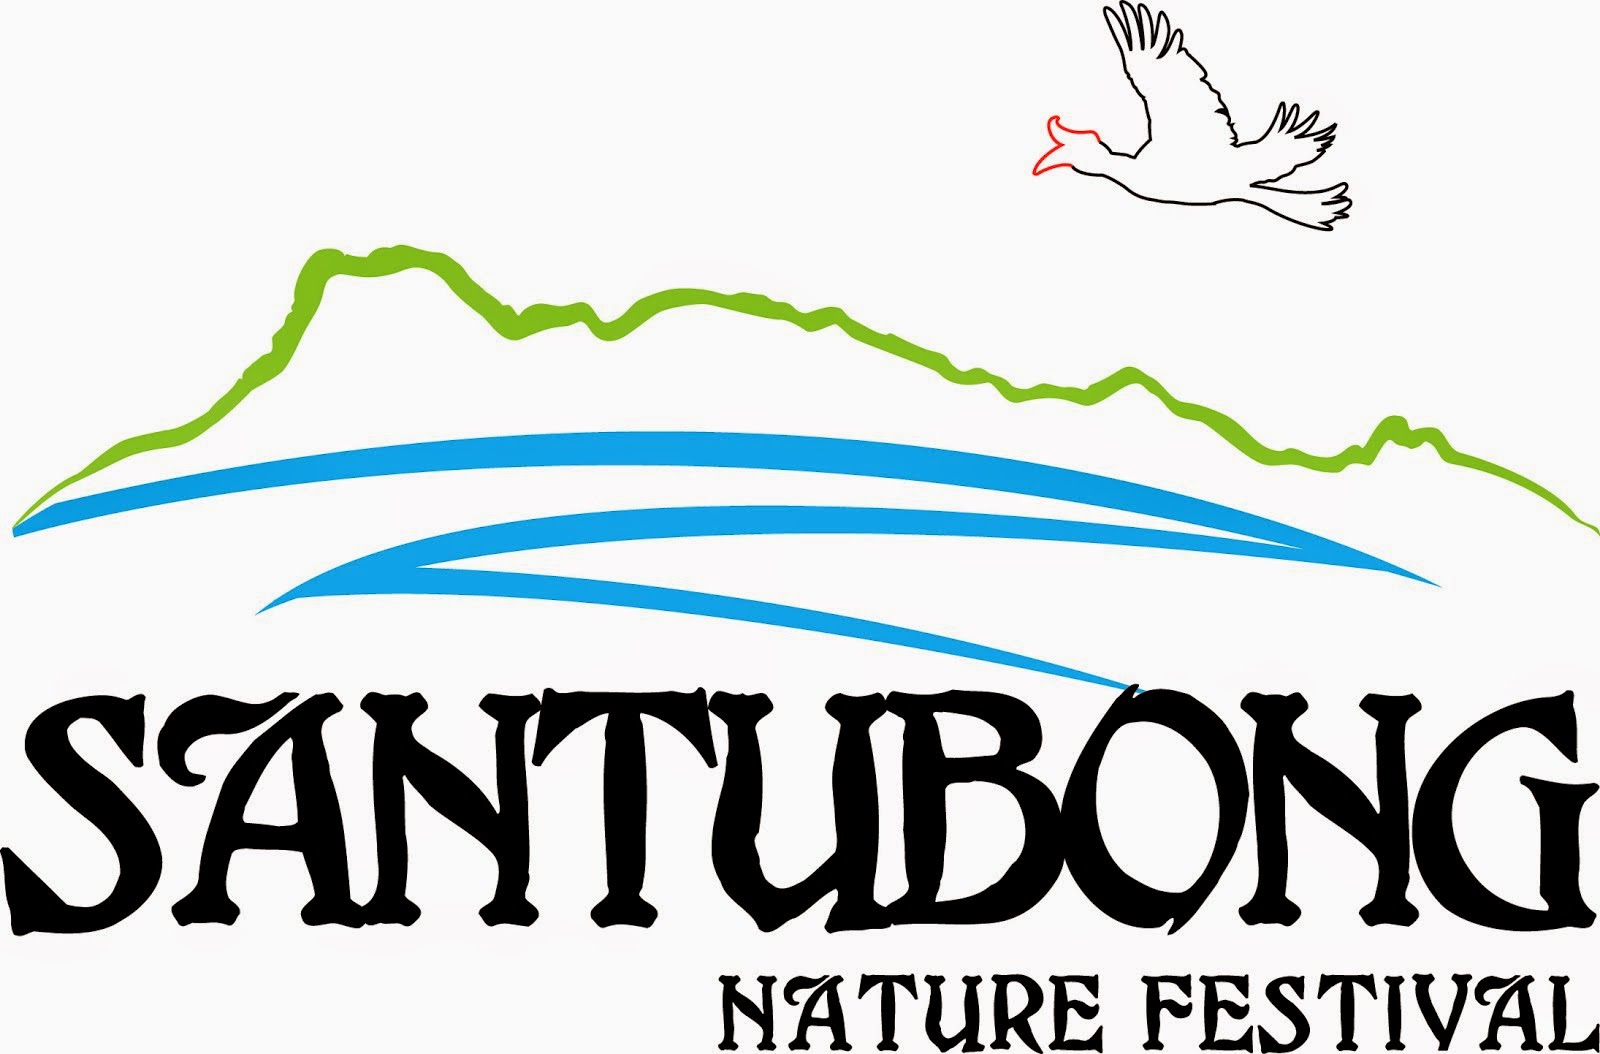 Santubong Nature Festival logo & link